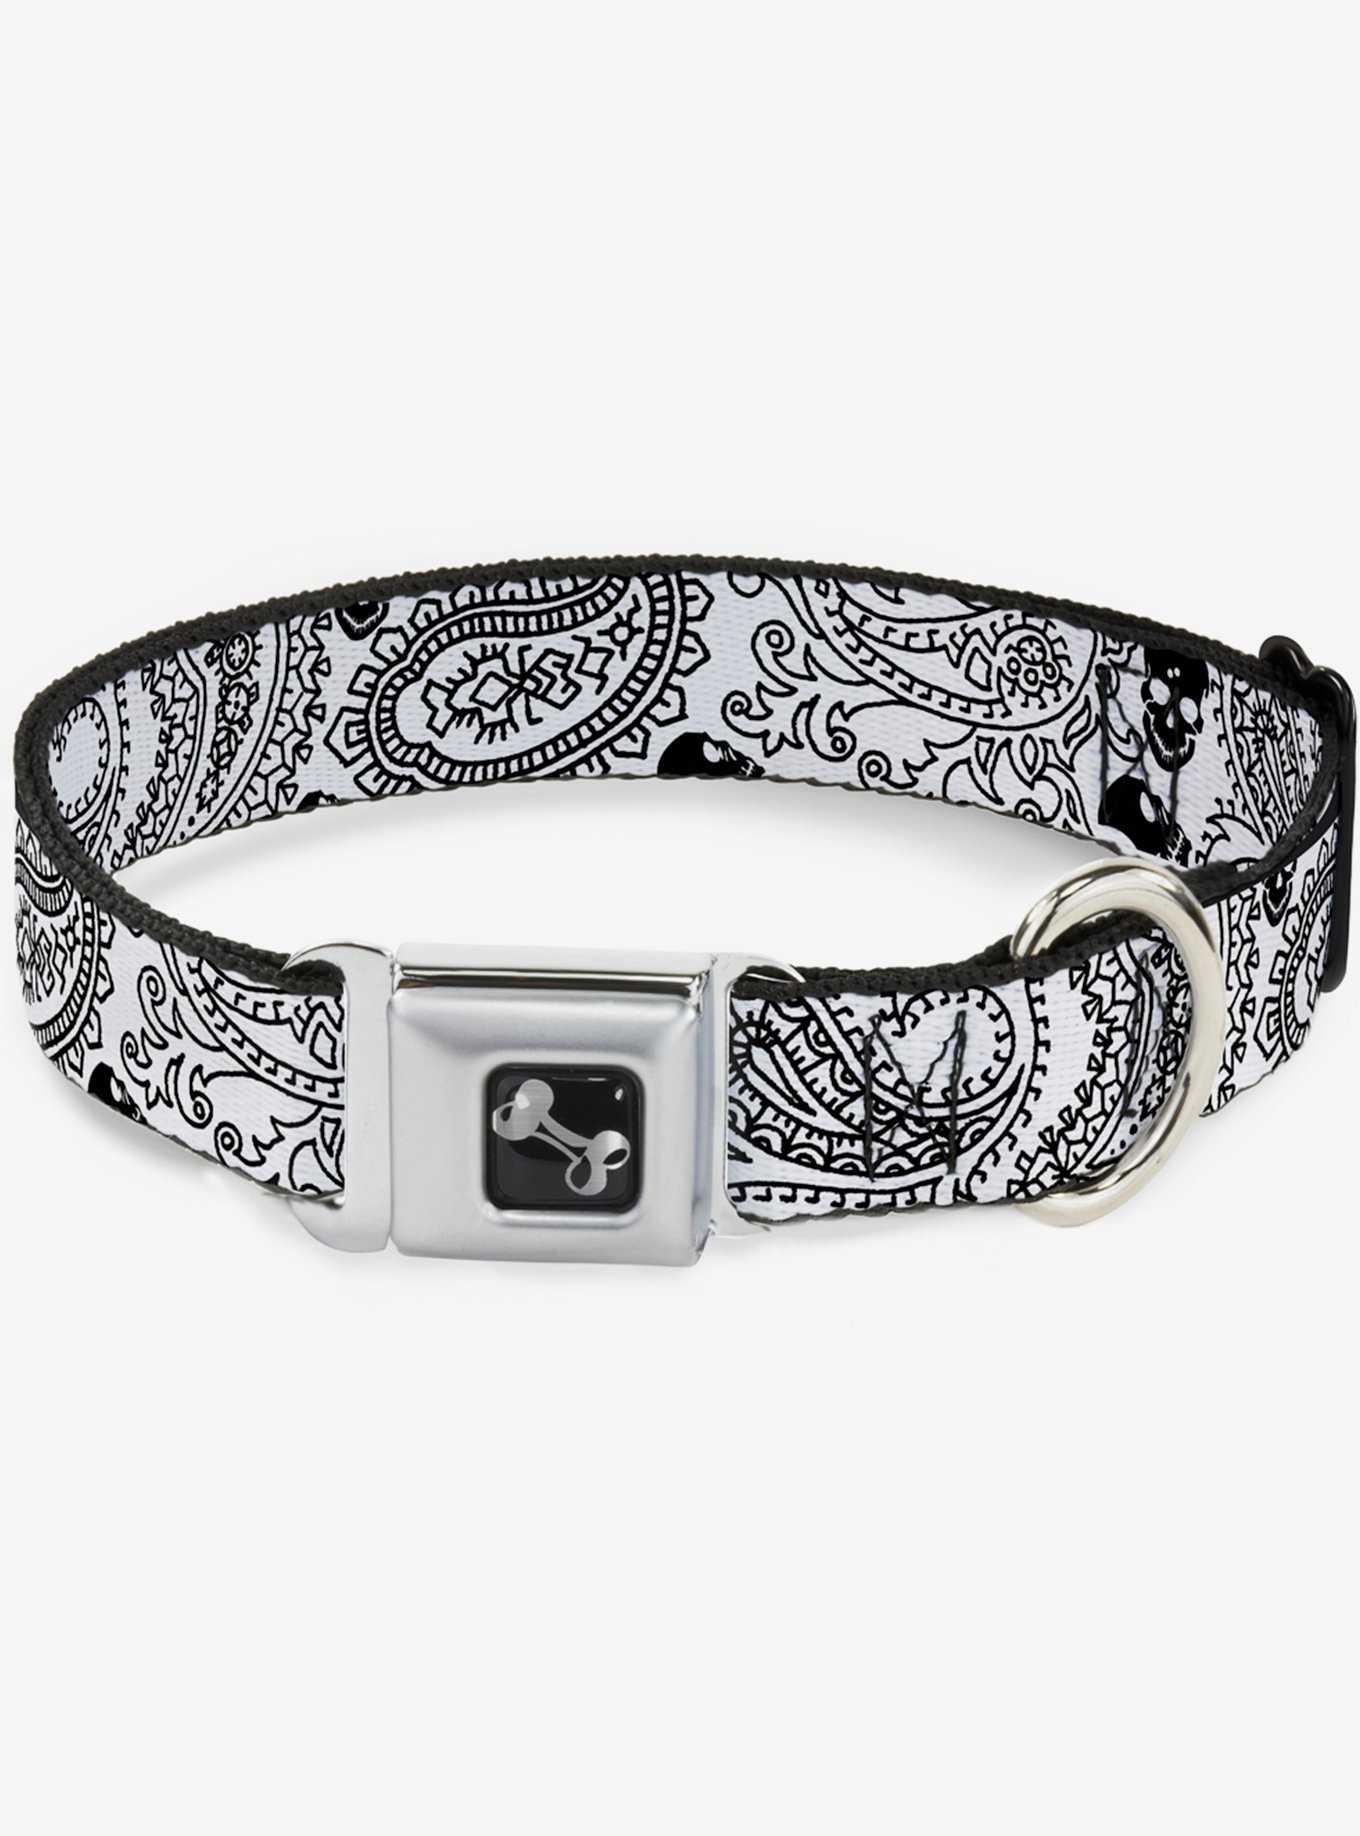 Bandana Skull Print Seatbelt Dog Collar White Black, , hi-res